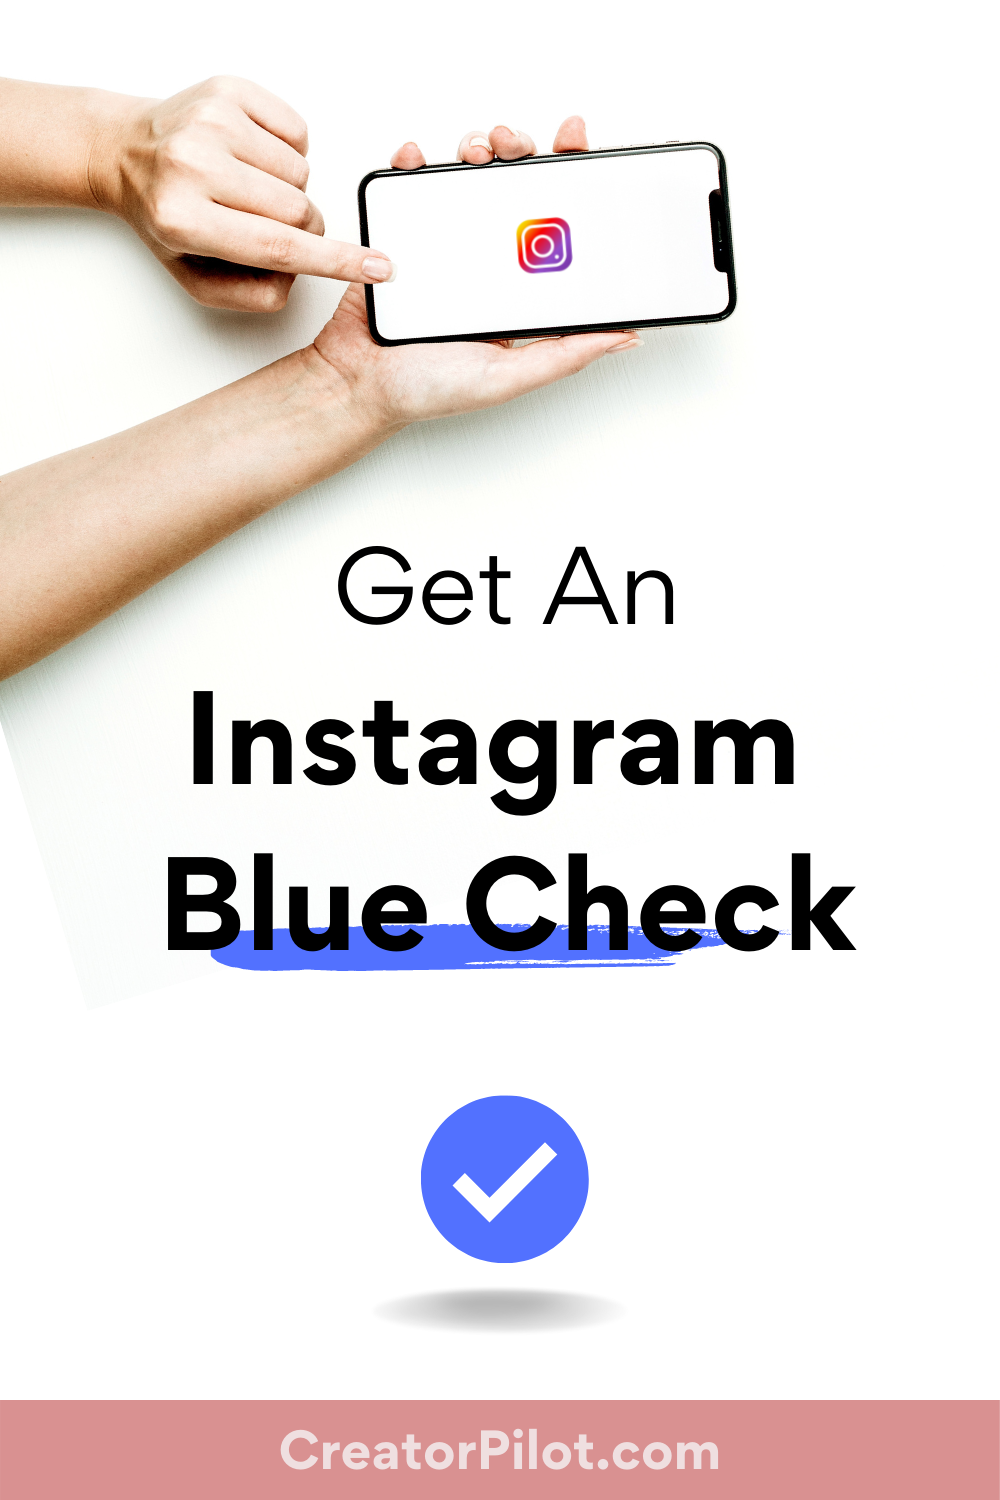 Get an Instagram Blue Check